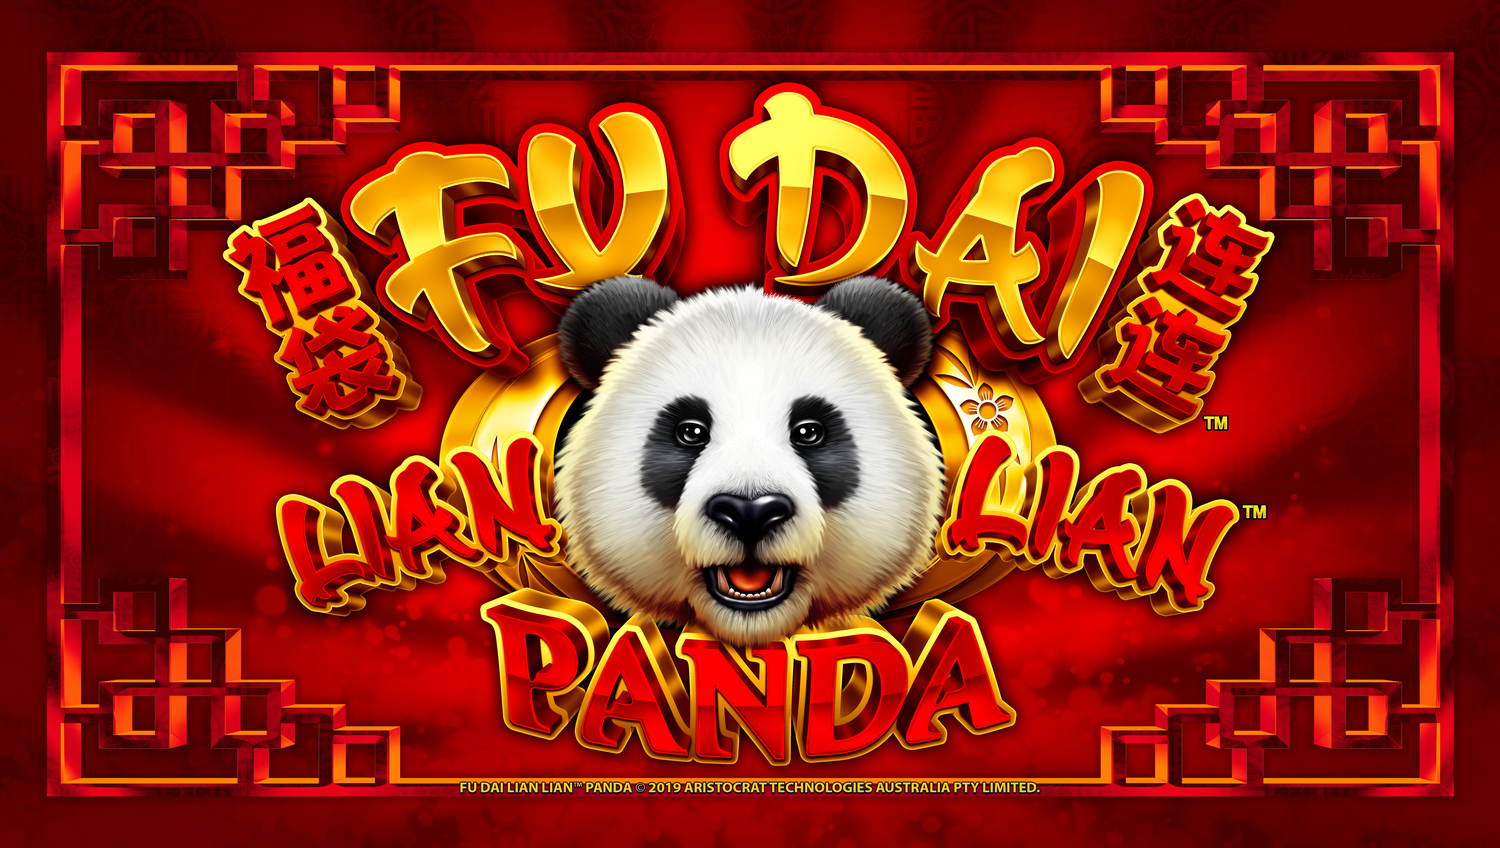 Fu Dai Han Lian Panda logo